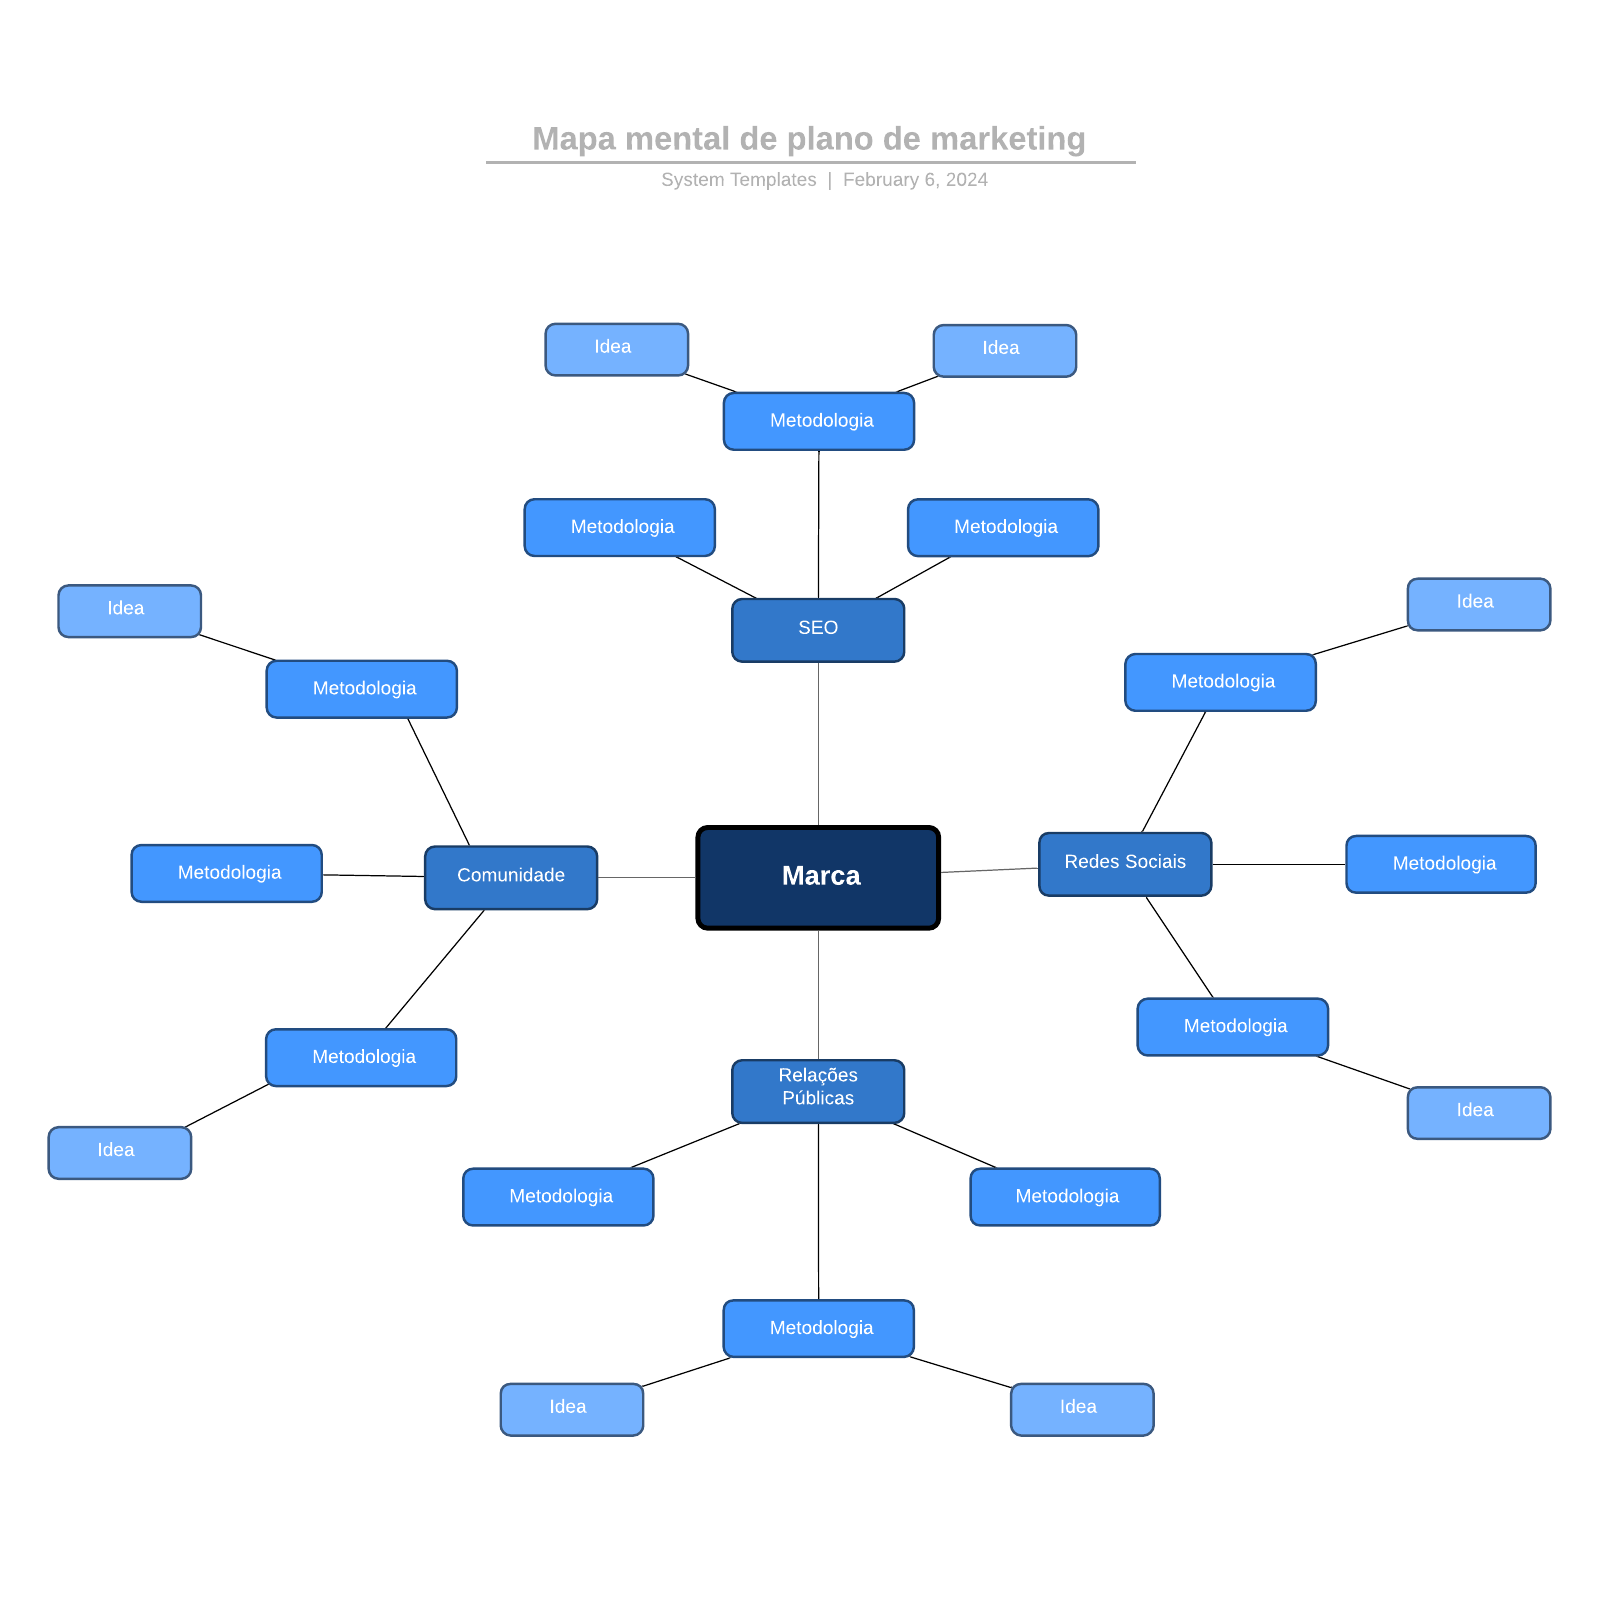 Mapa mental de plano de marketing example